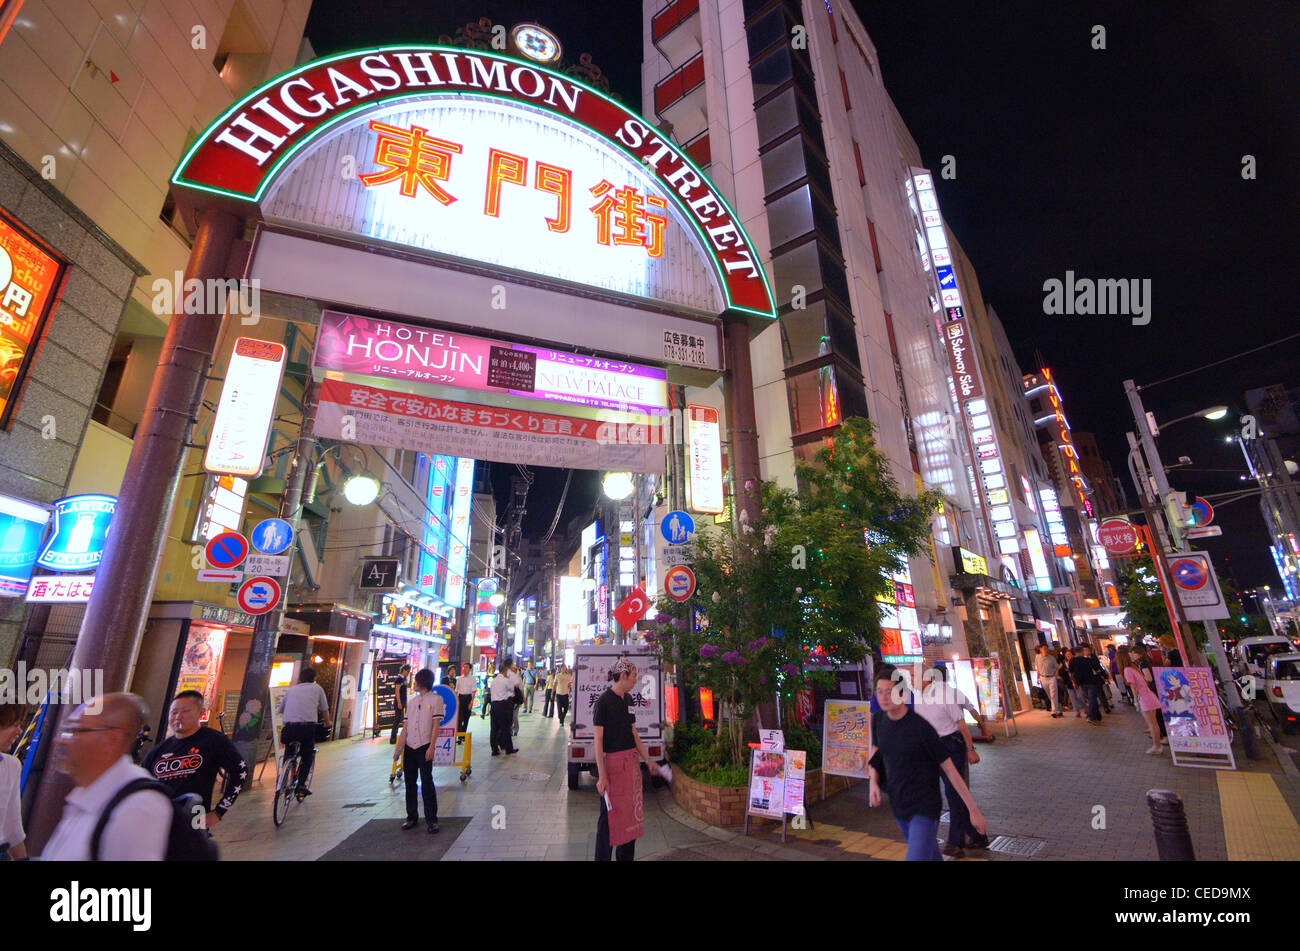 La vida nocturna en Kobe, Japón en la calle Higashimon Foto de stock